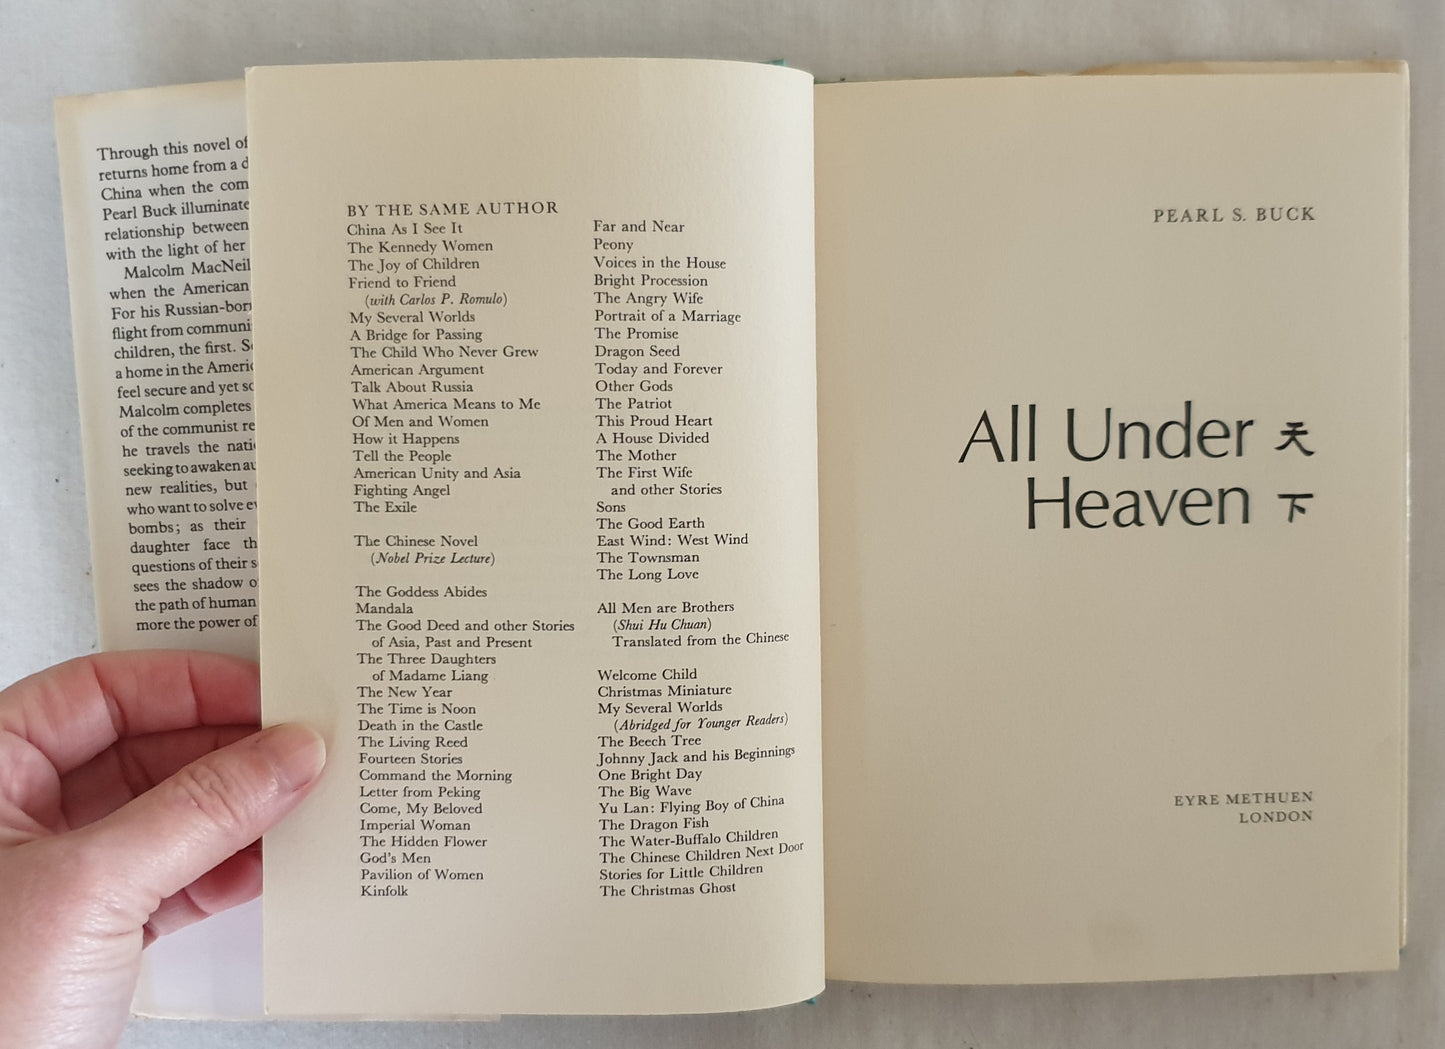 All Under Heaven by Pearl S. Buck